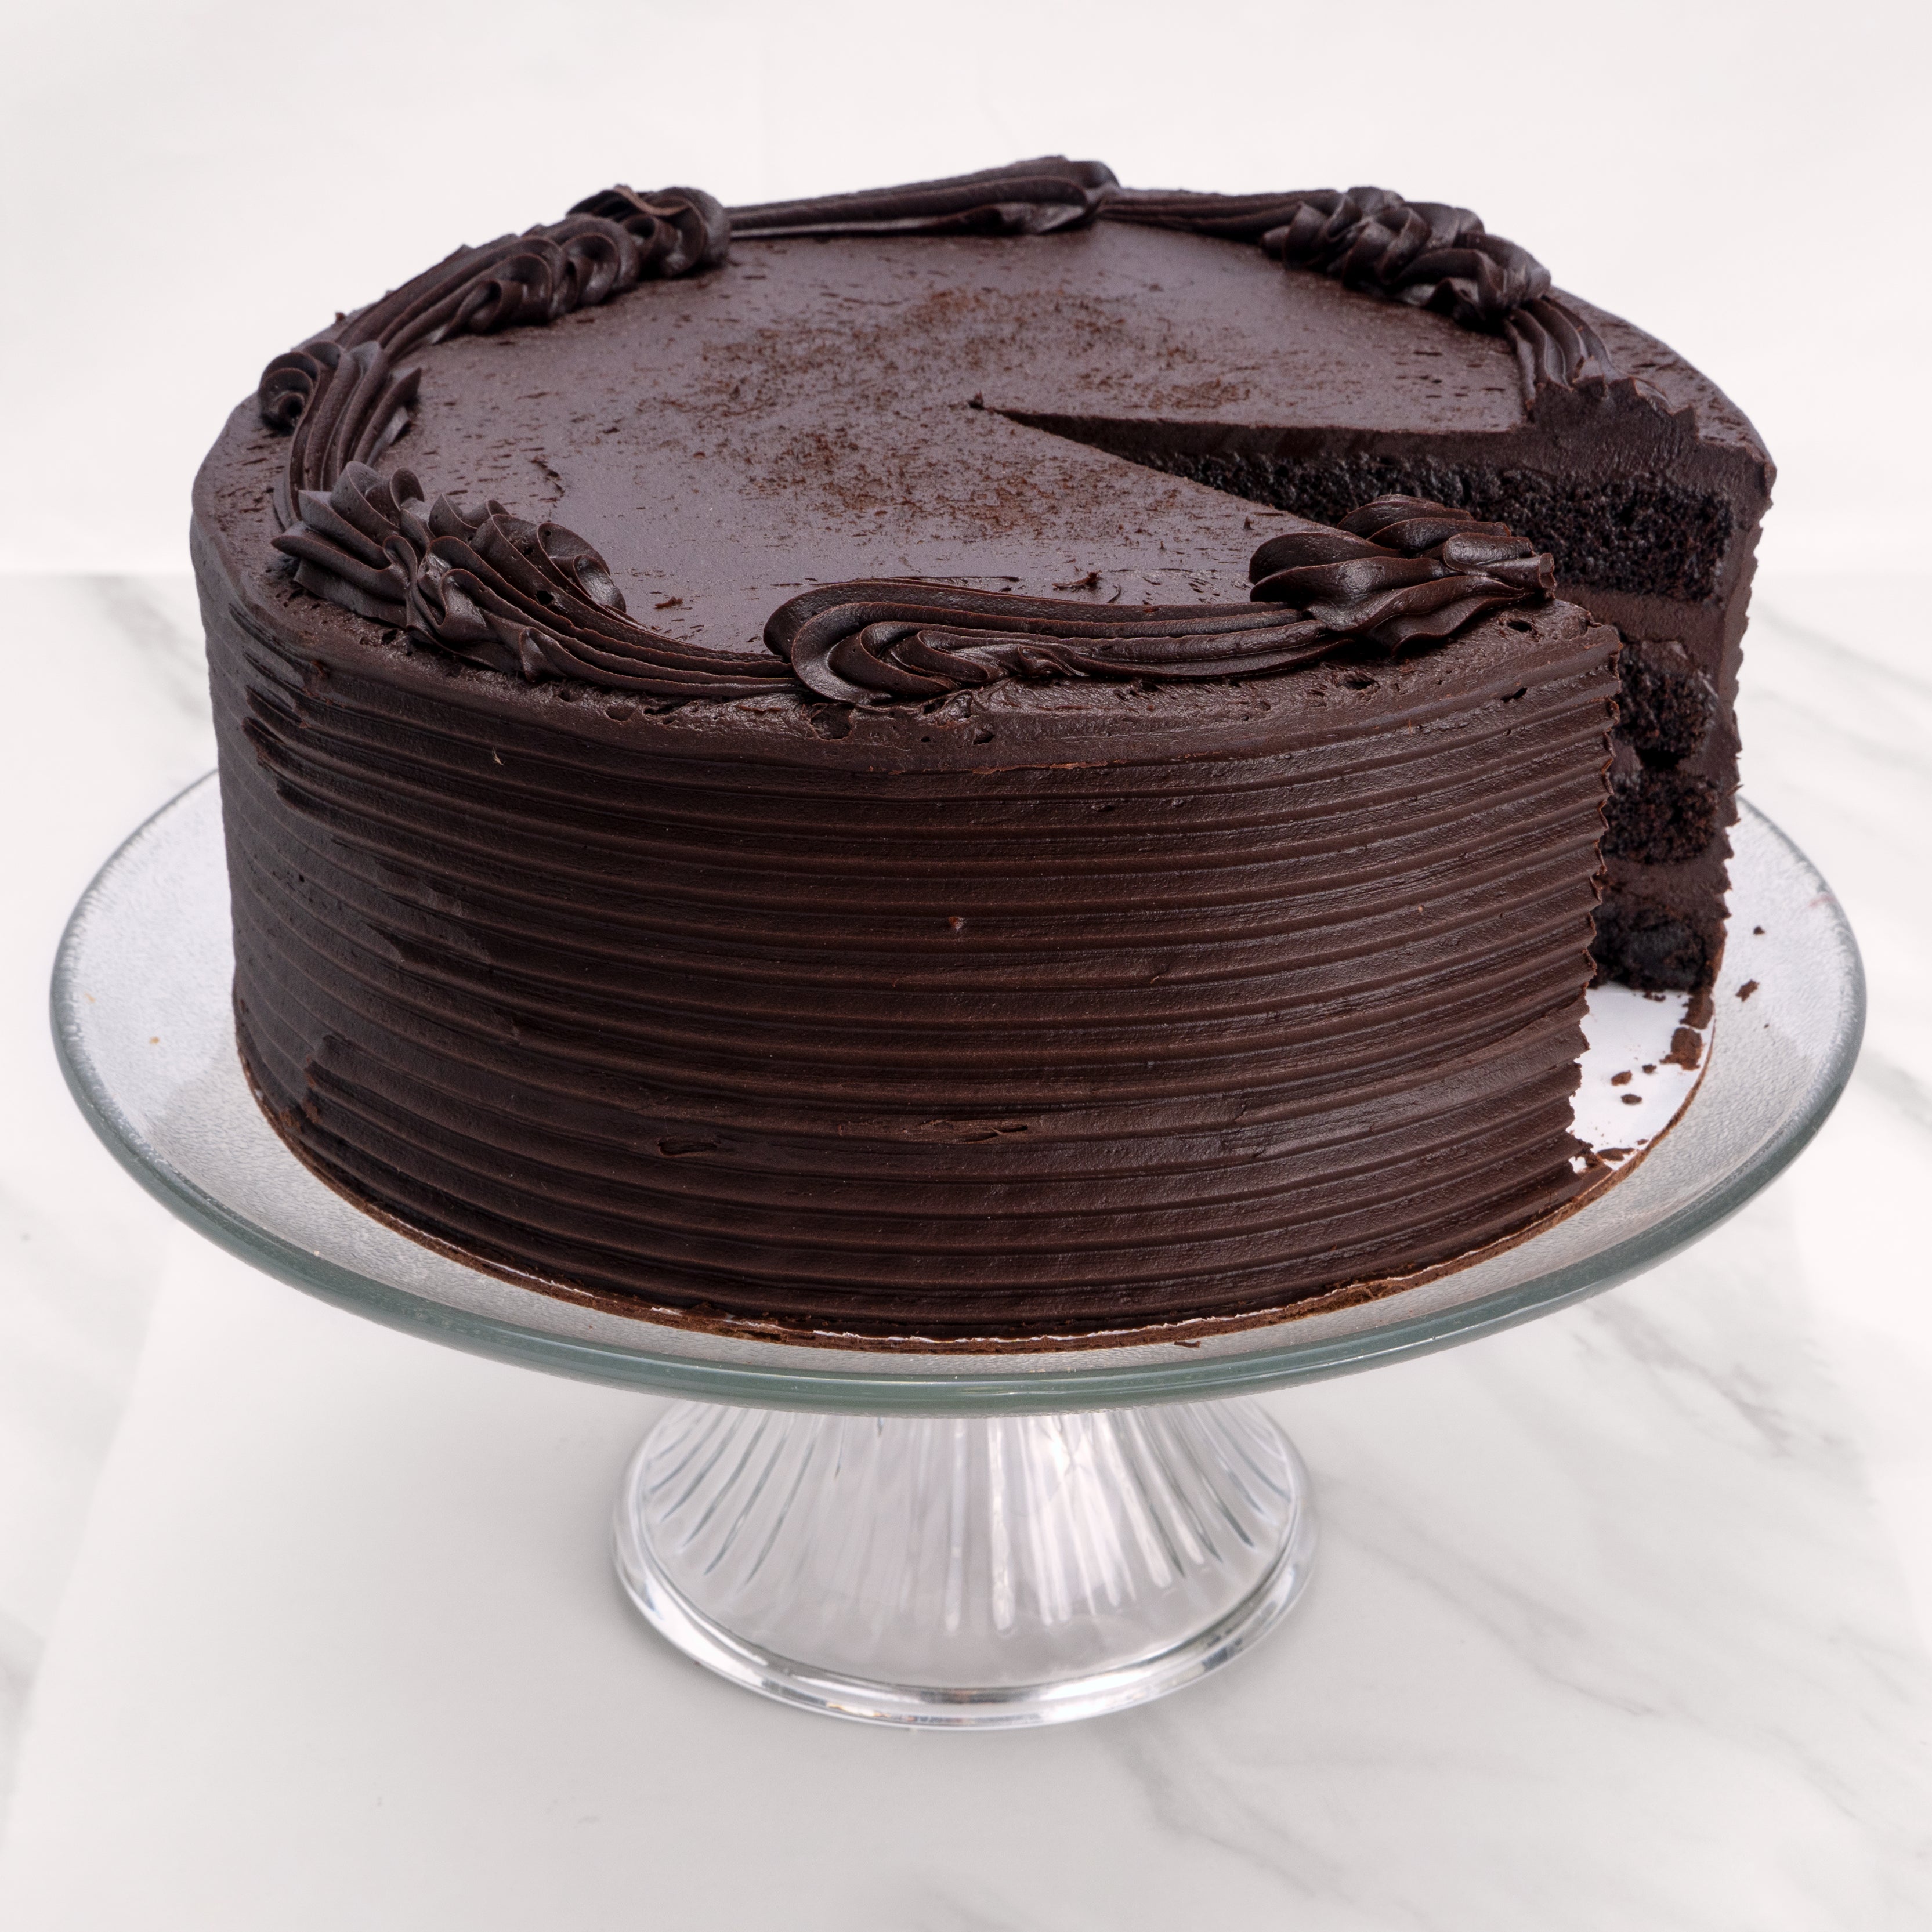 9" Heavenly Chocolate Cake.